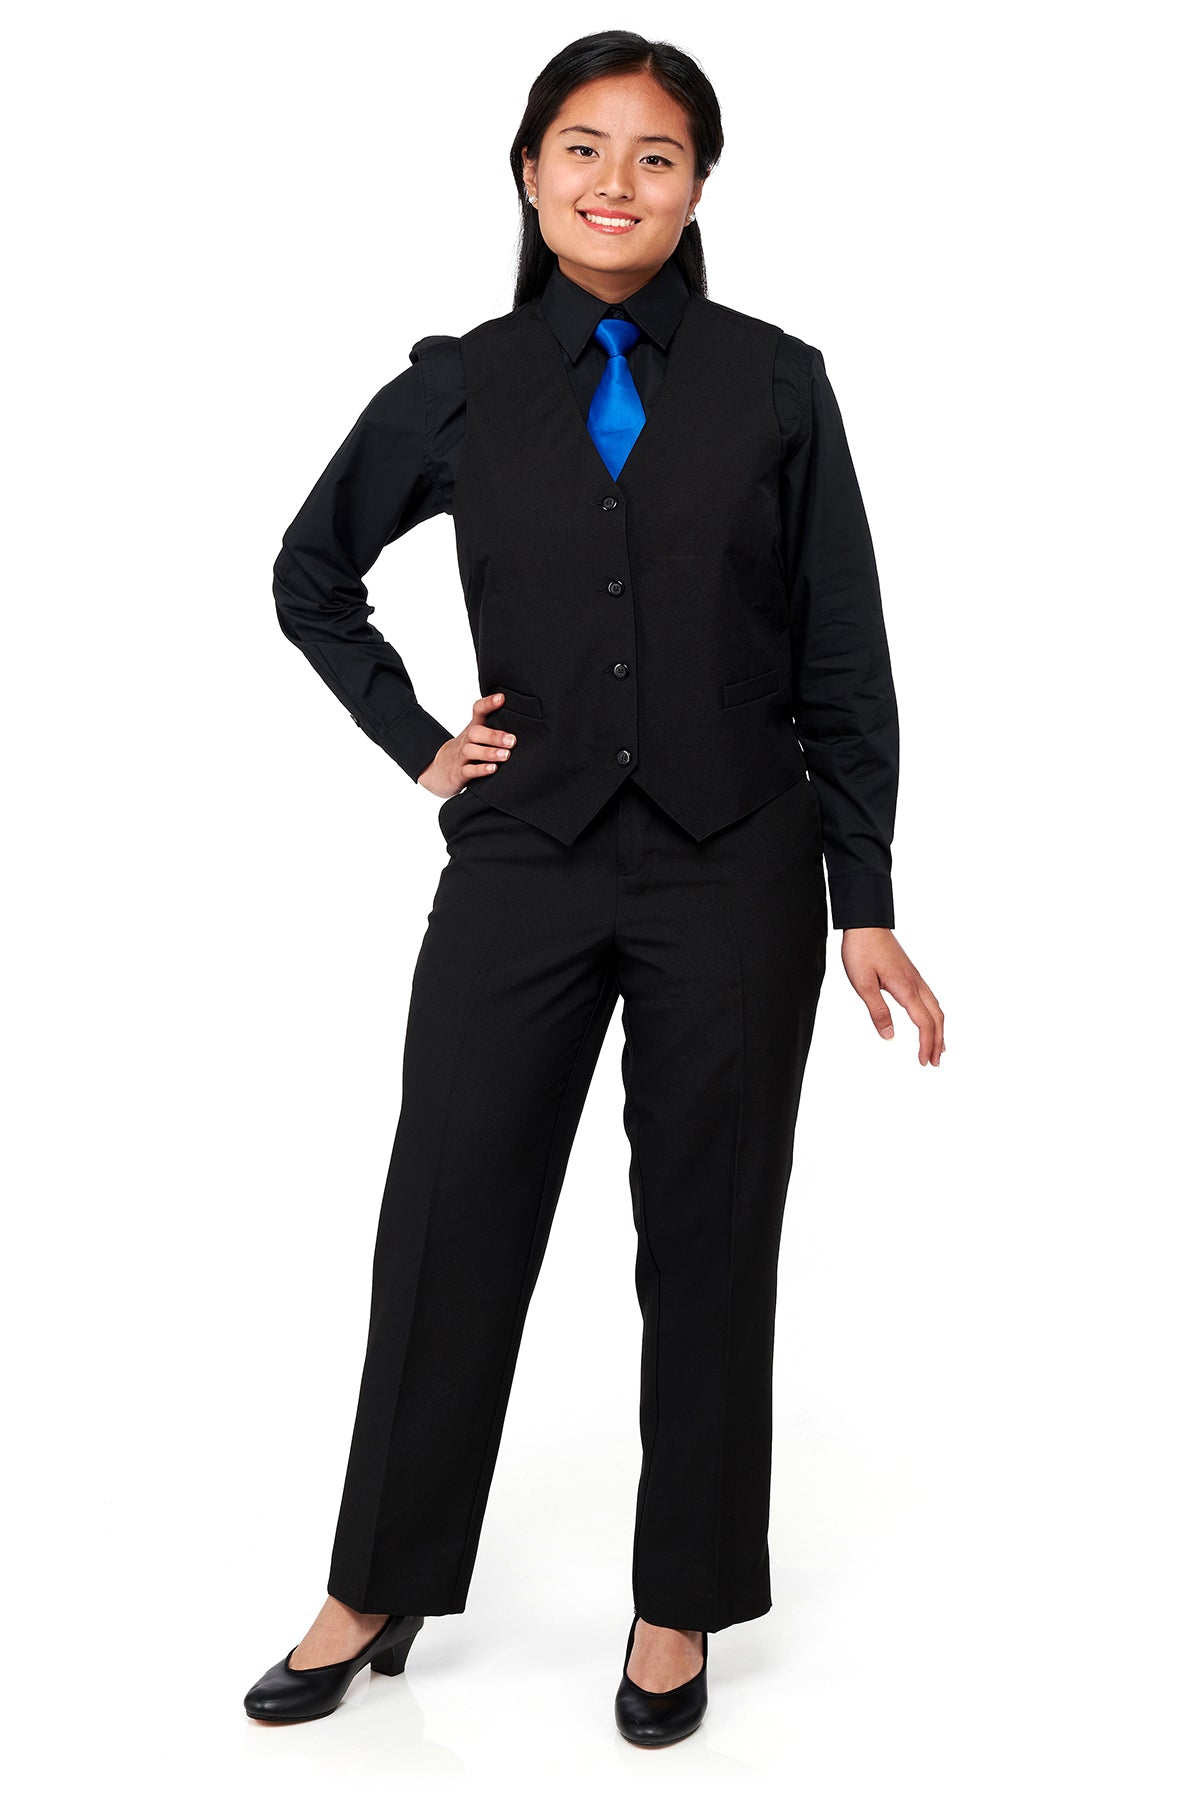 RILEY (Style #6710L) - Ladies Black Shirt, Vest, Tie Package with Pants